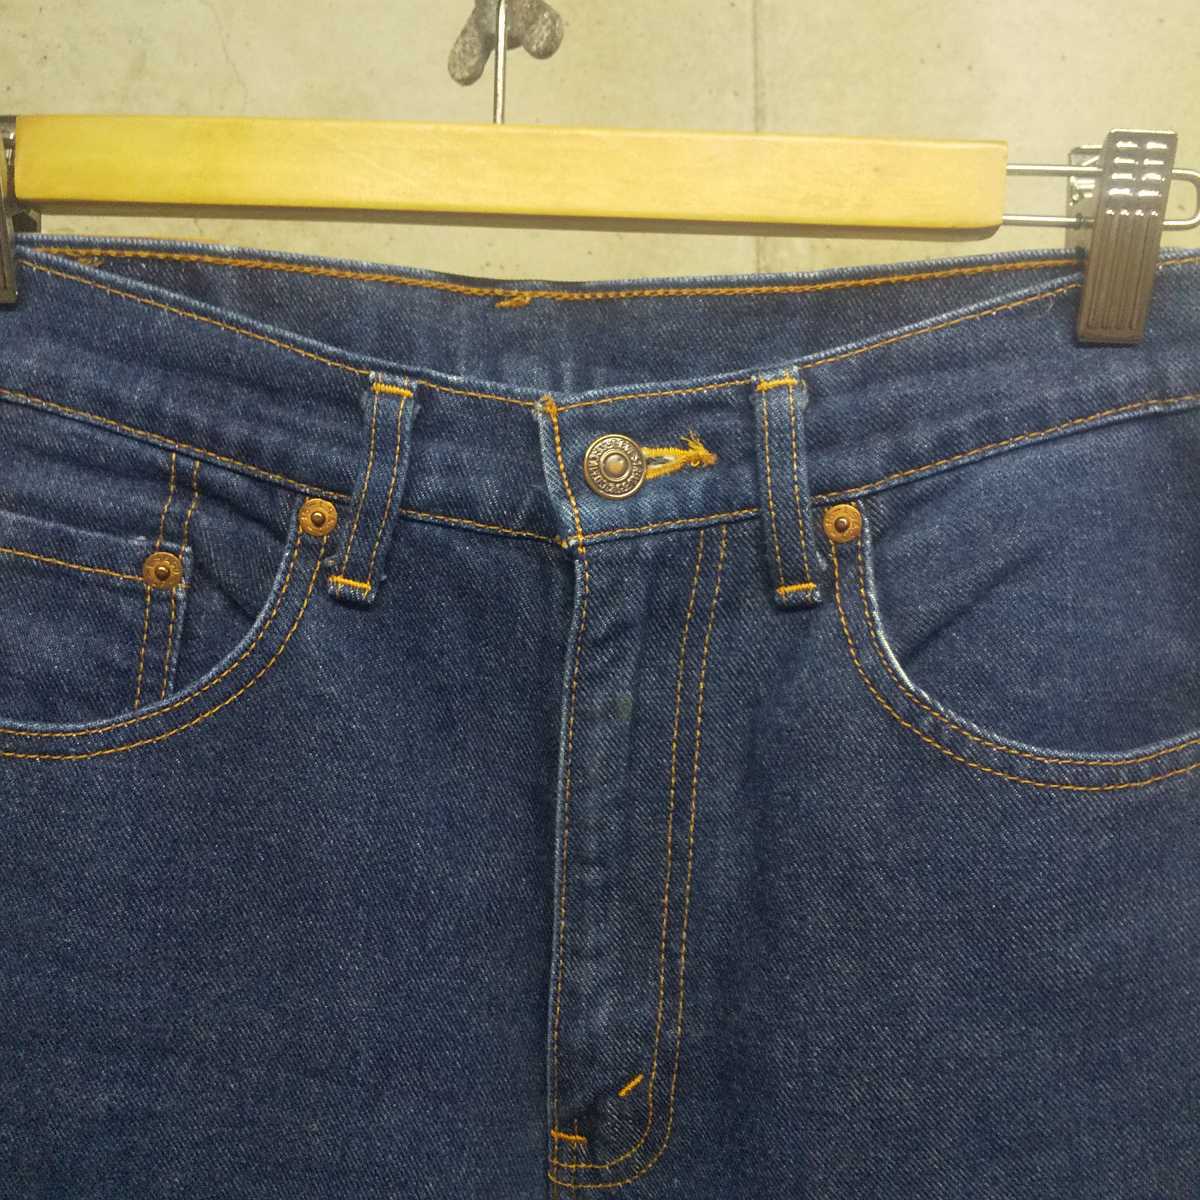 90s Levis / リーバイス W508 ハイウエスト ストレートデニム Levi's デニム パンツ jeans denime Gパン ジーンズ  ジーパン 古着 used